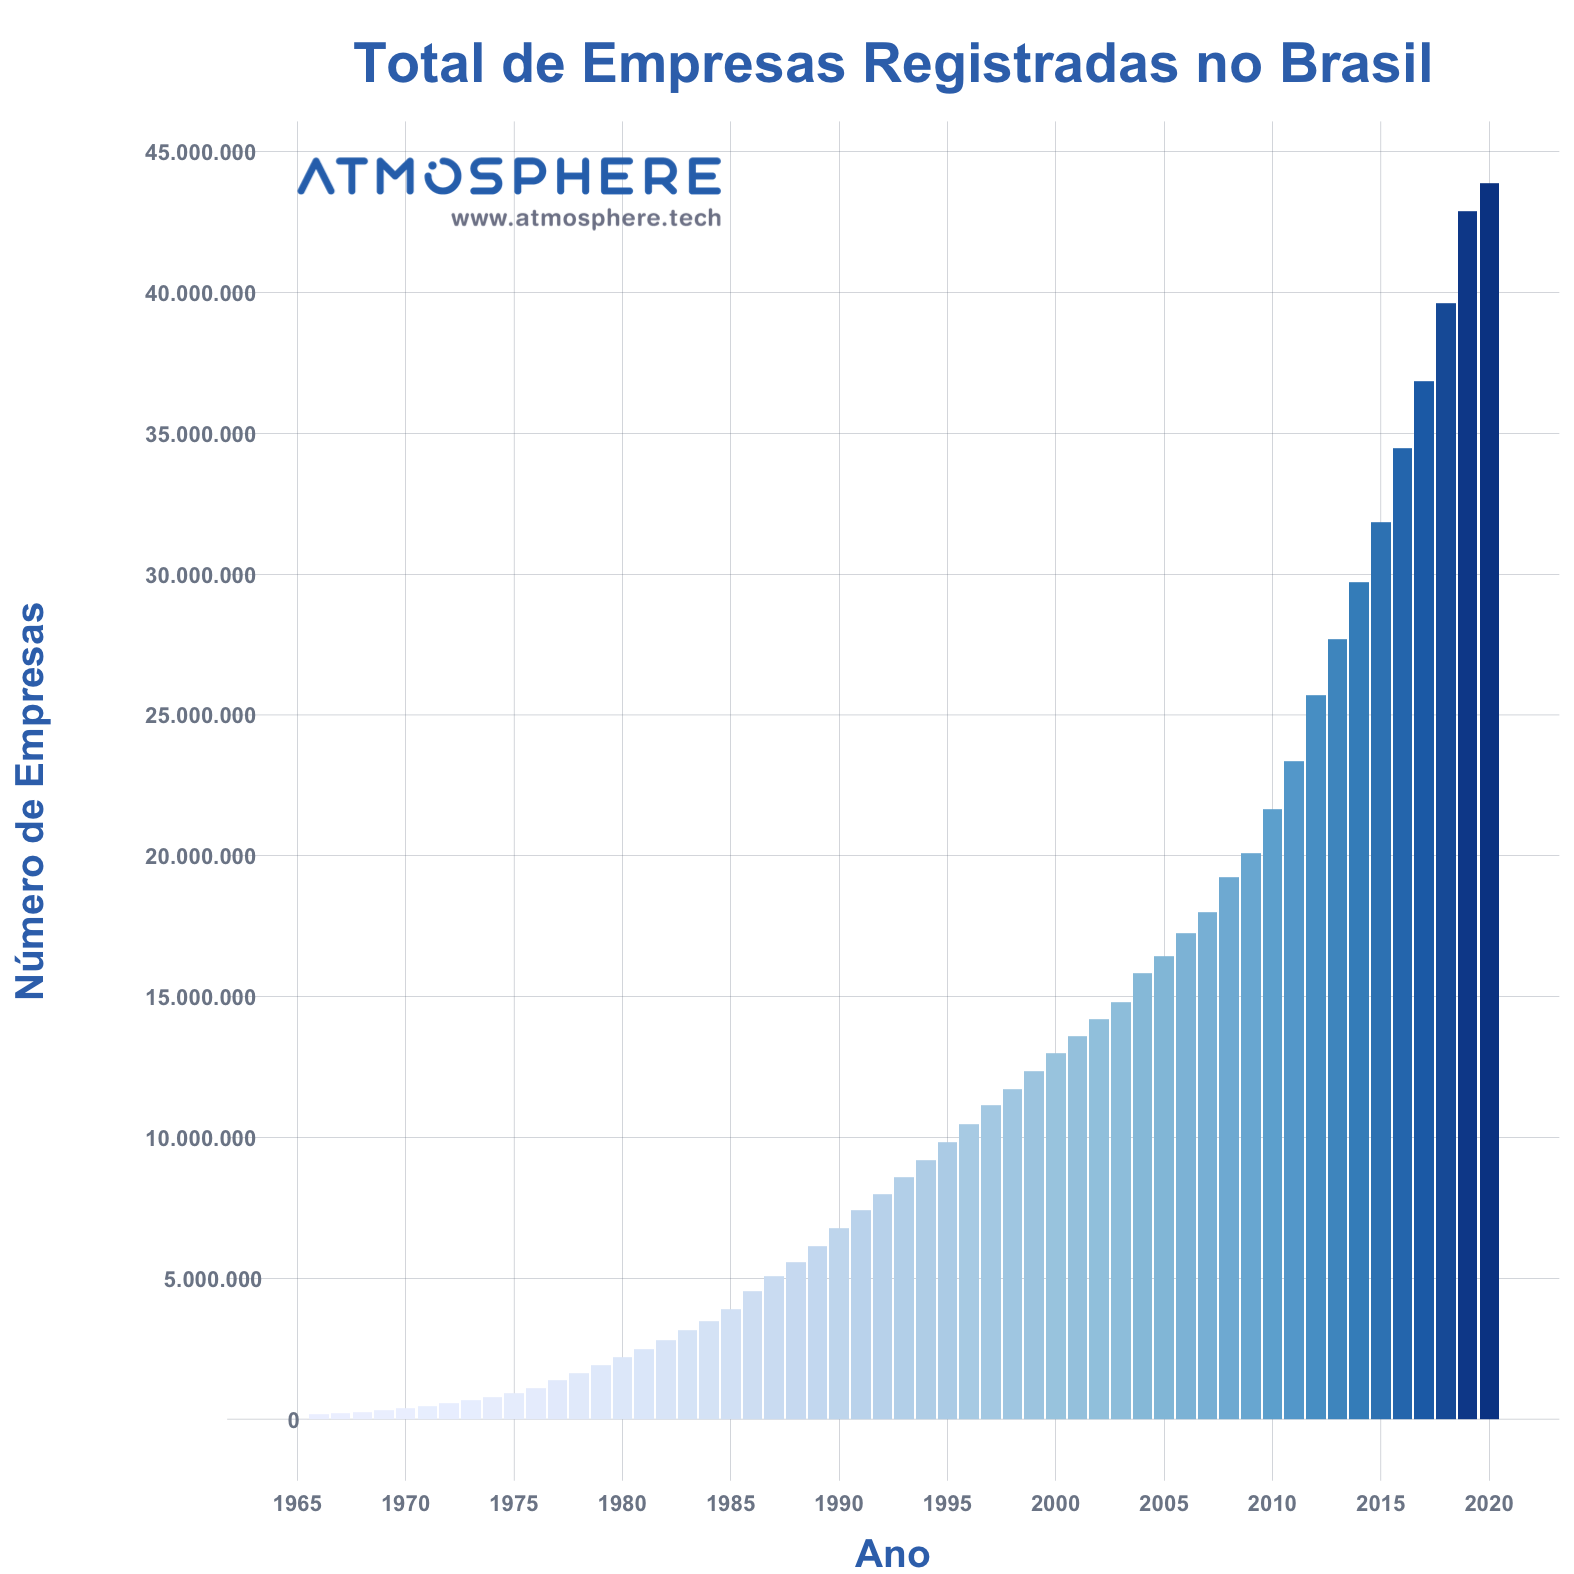 Atmosphere Total Empresas Registradas no Brasil